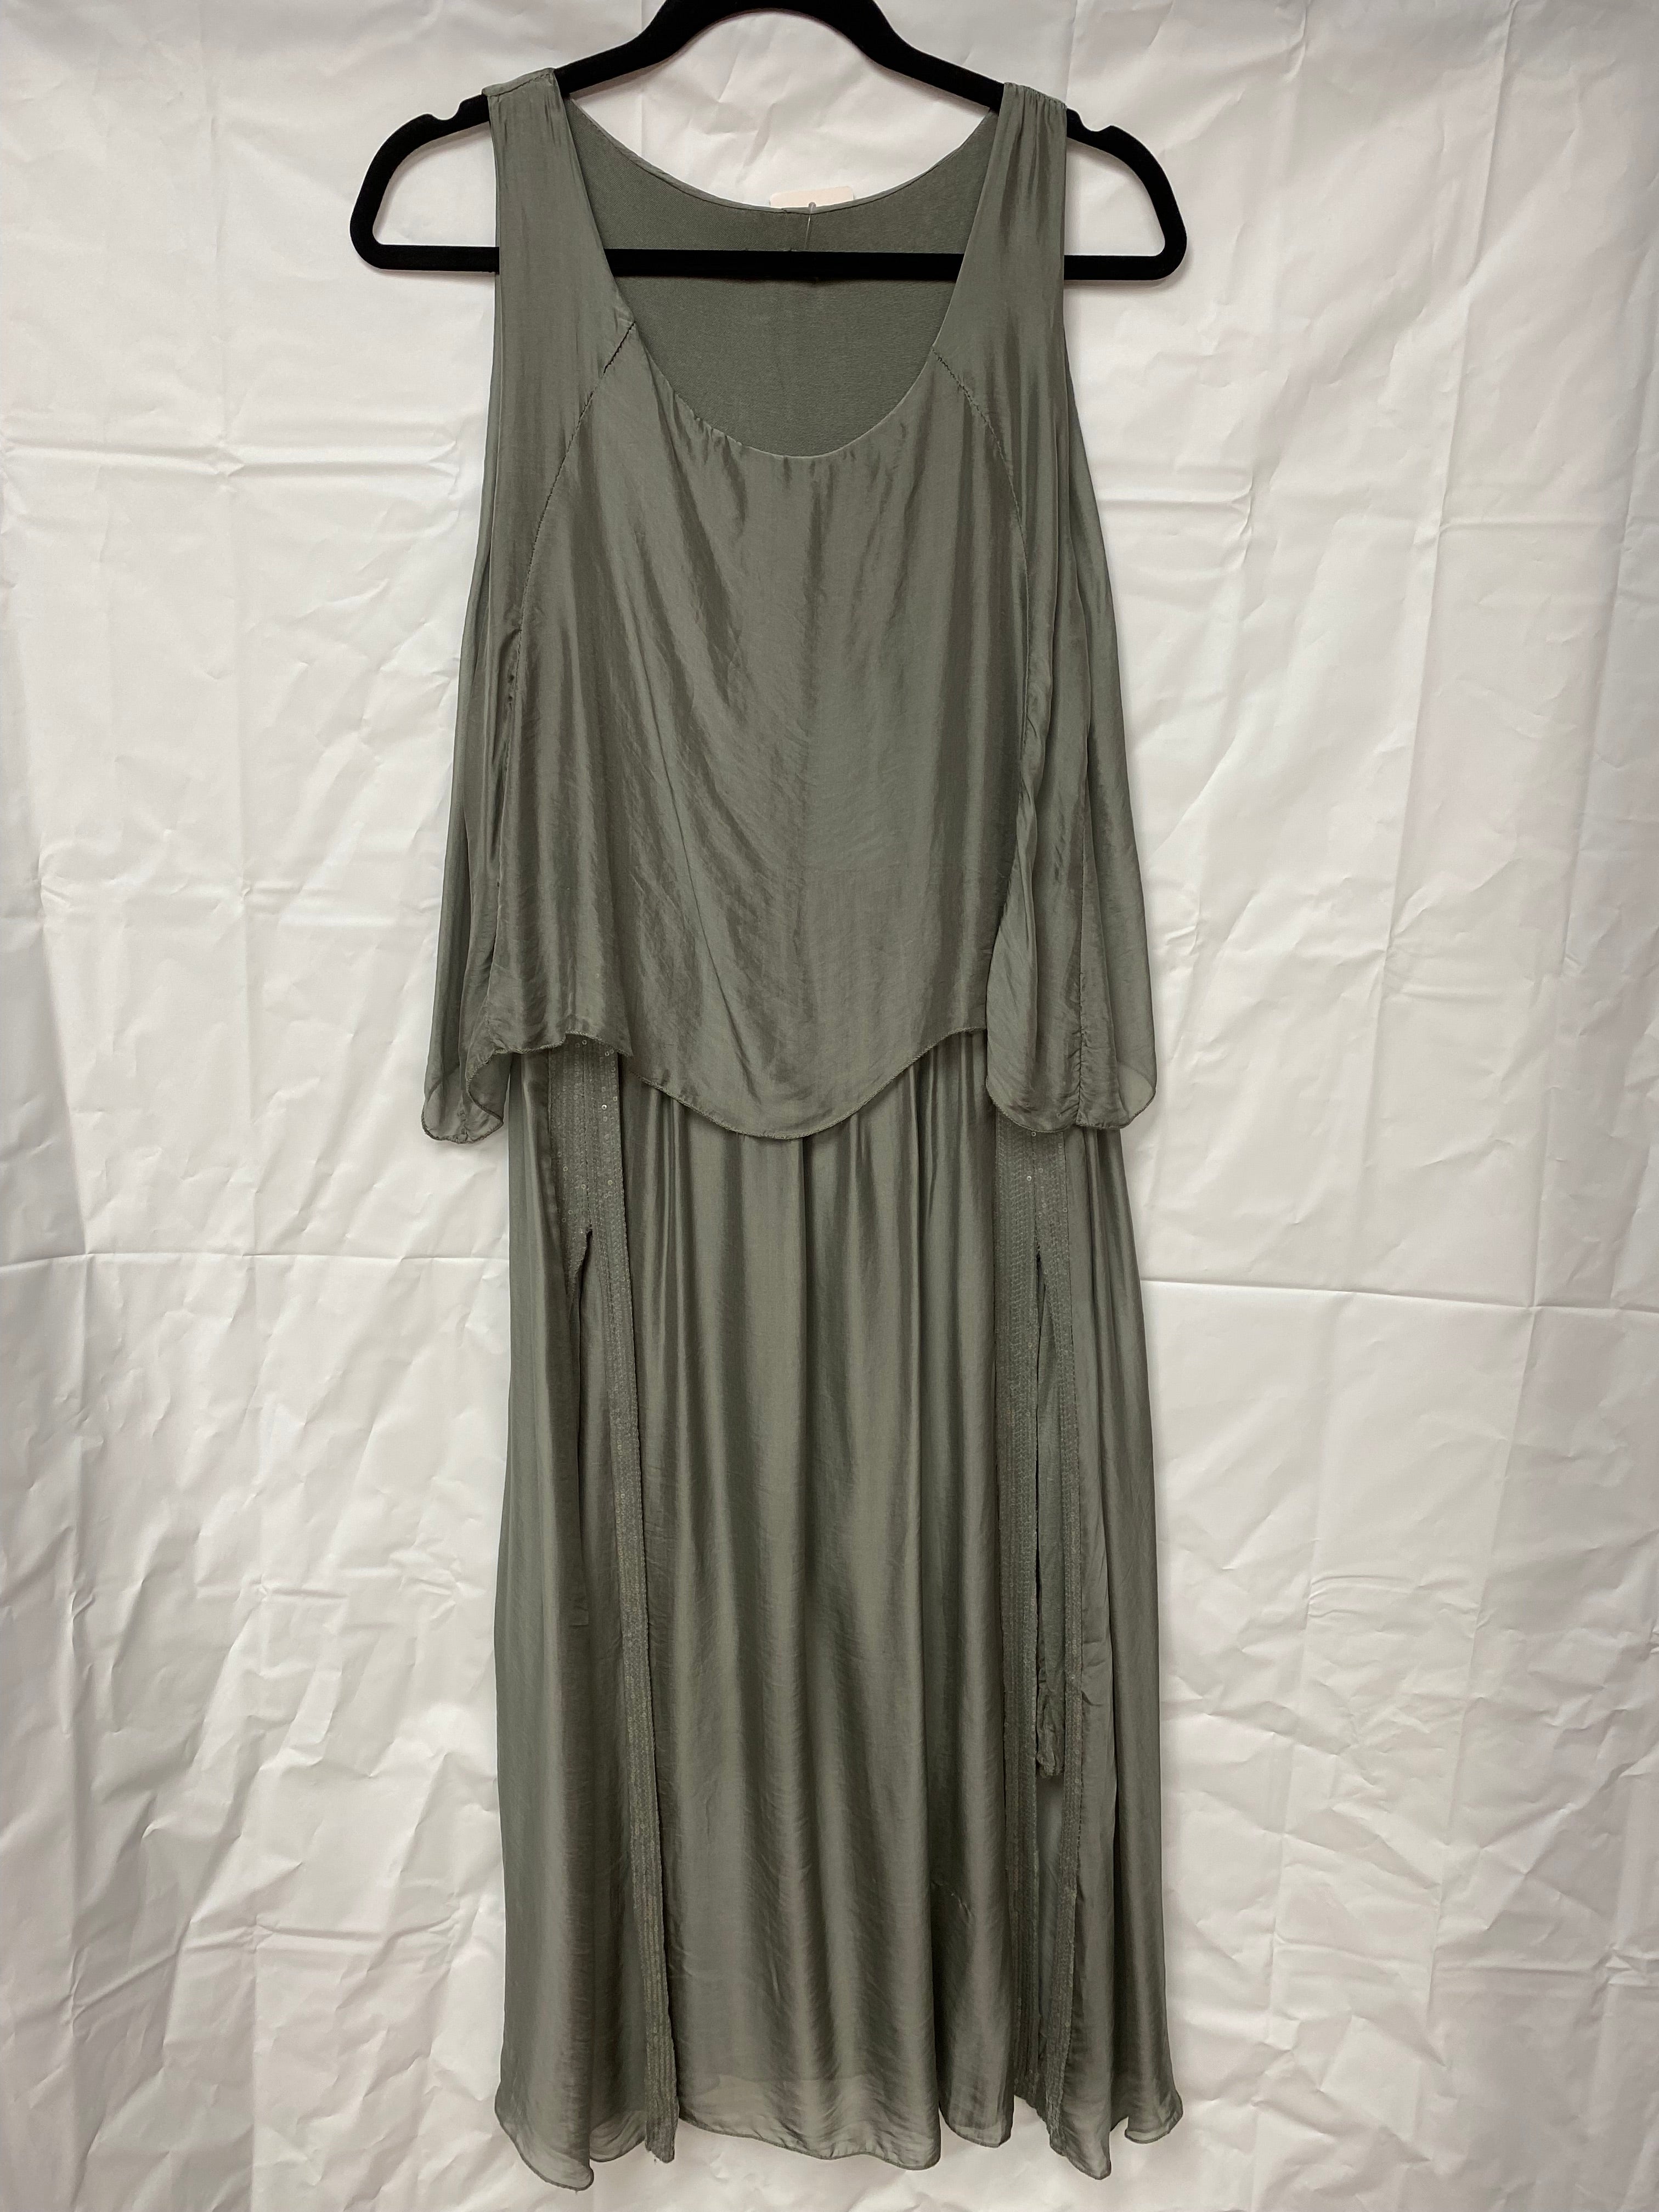 Meo Meli, Made in Italy, silk dress, 64750, Italian silk overlay dress ...